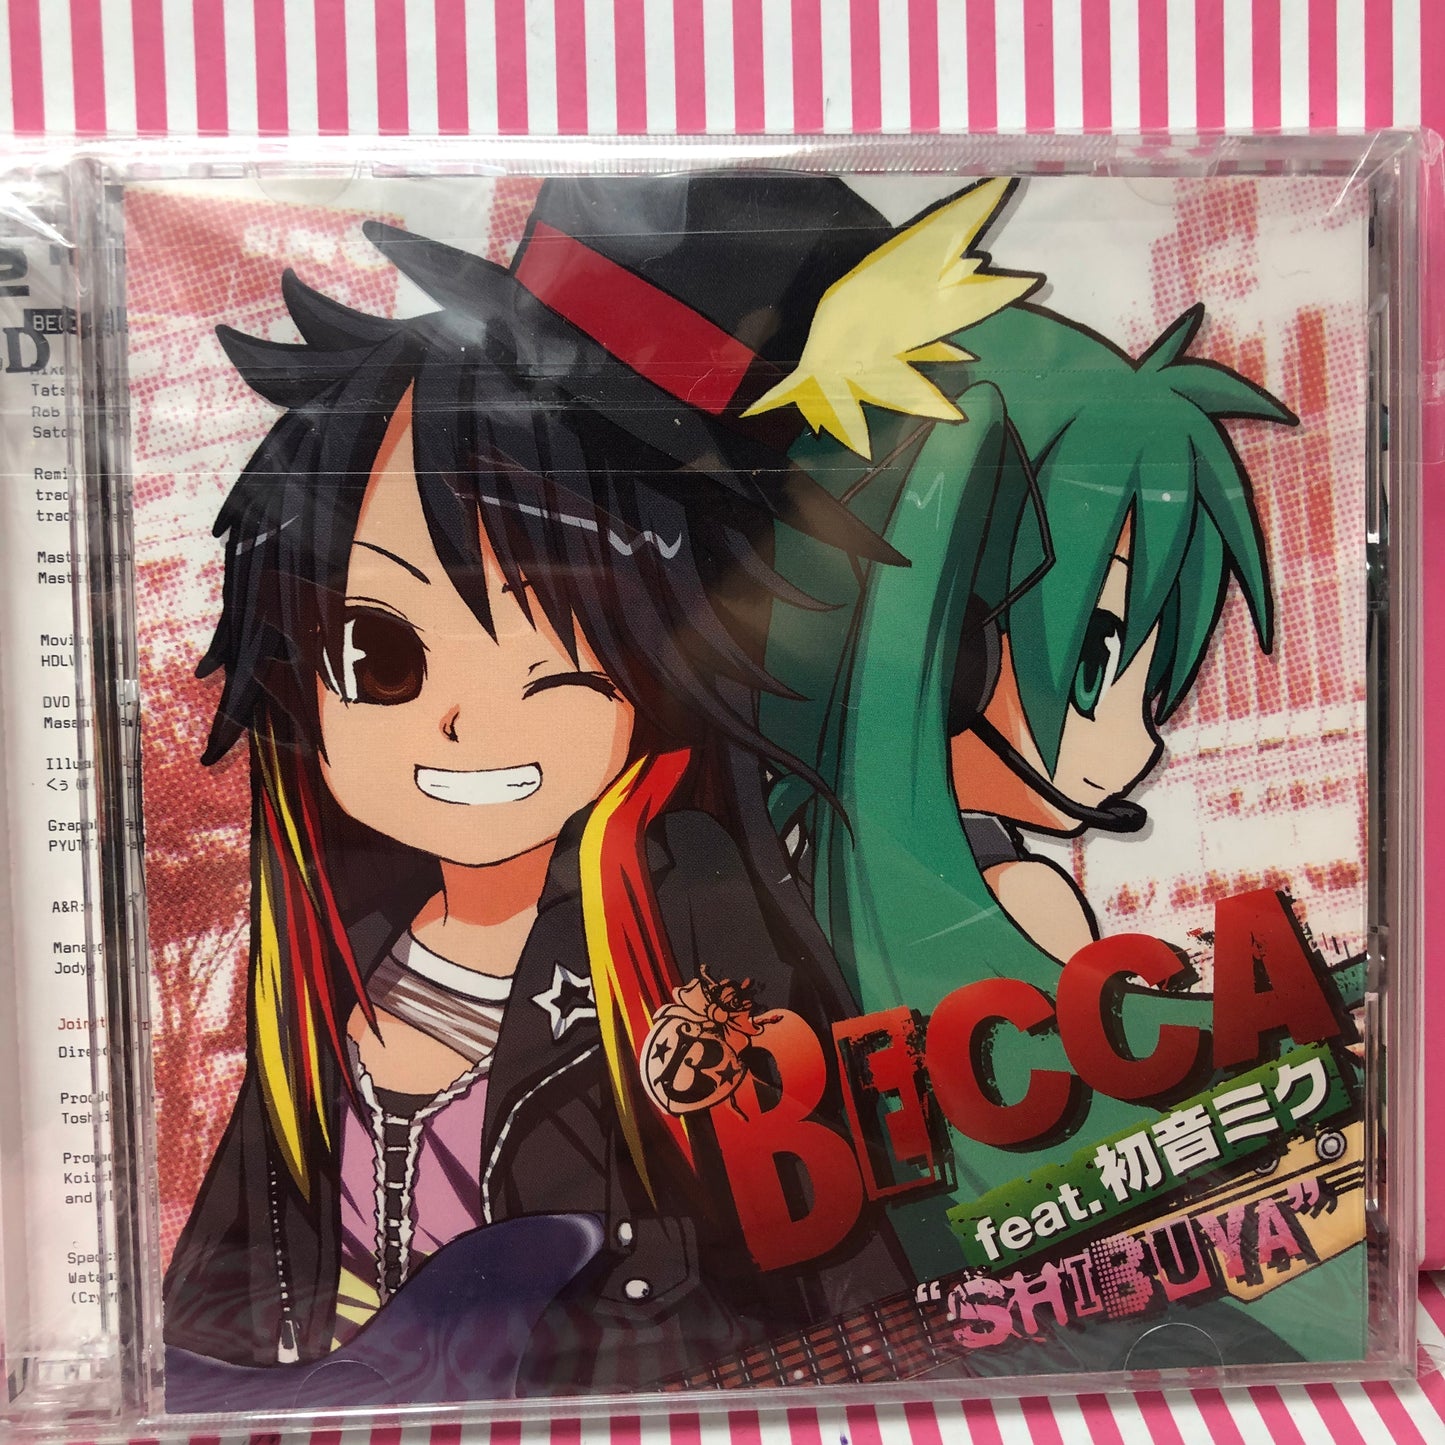 BECCA ft. Hatsune Miku - CD "Shibuya"